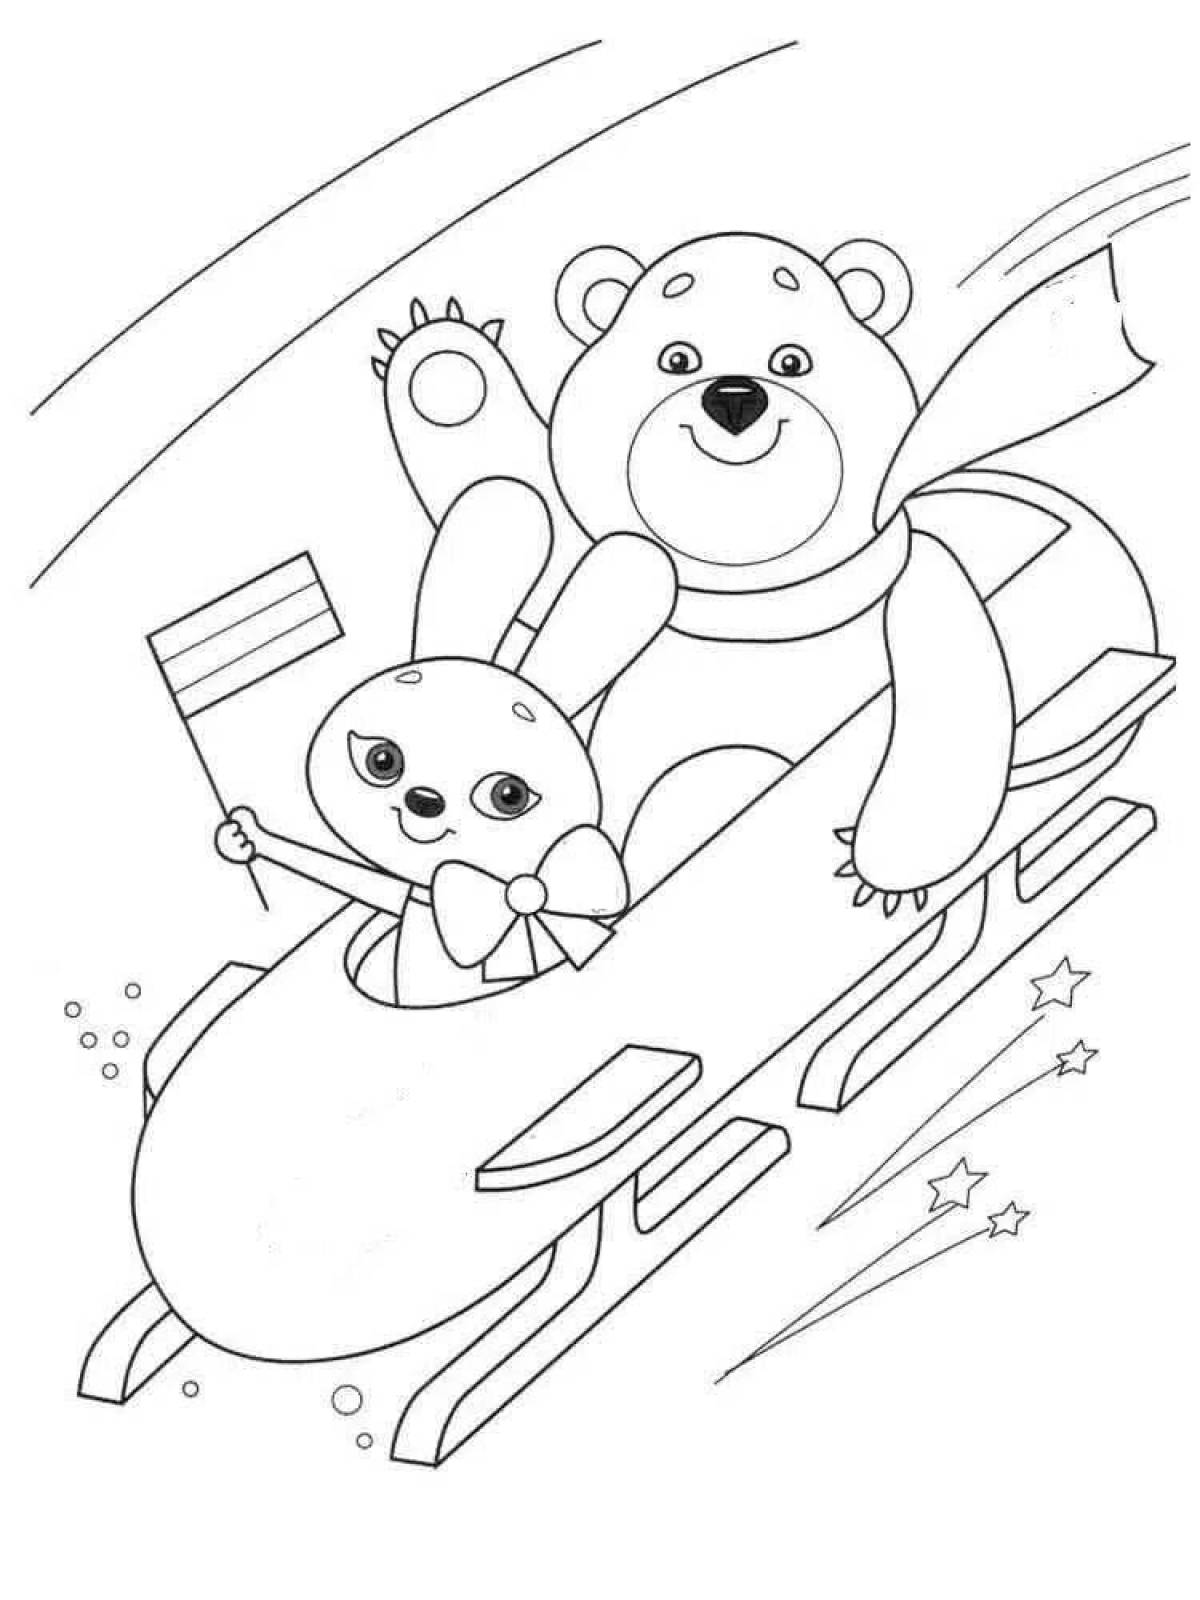 Coloring page joyful olympic bear